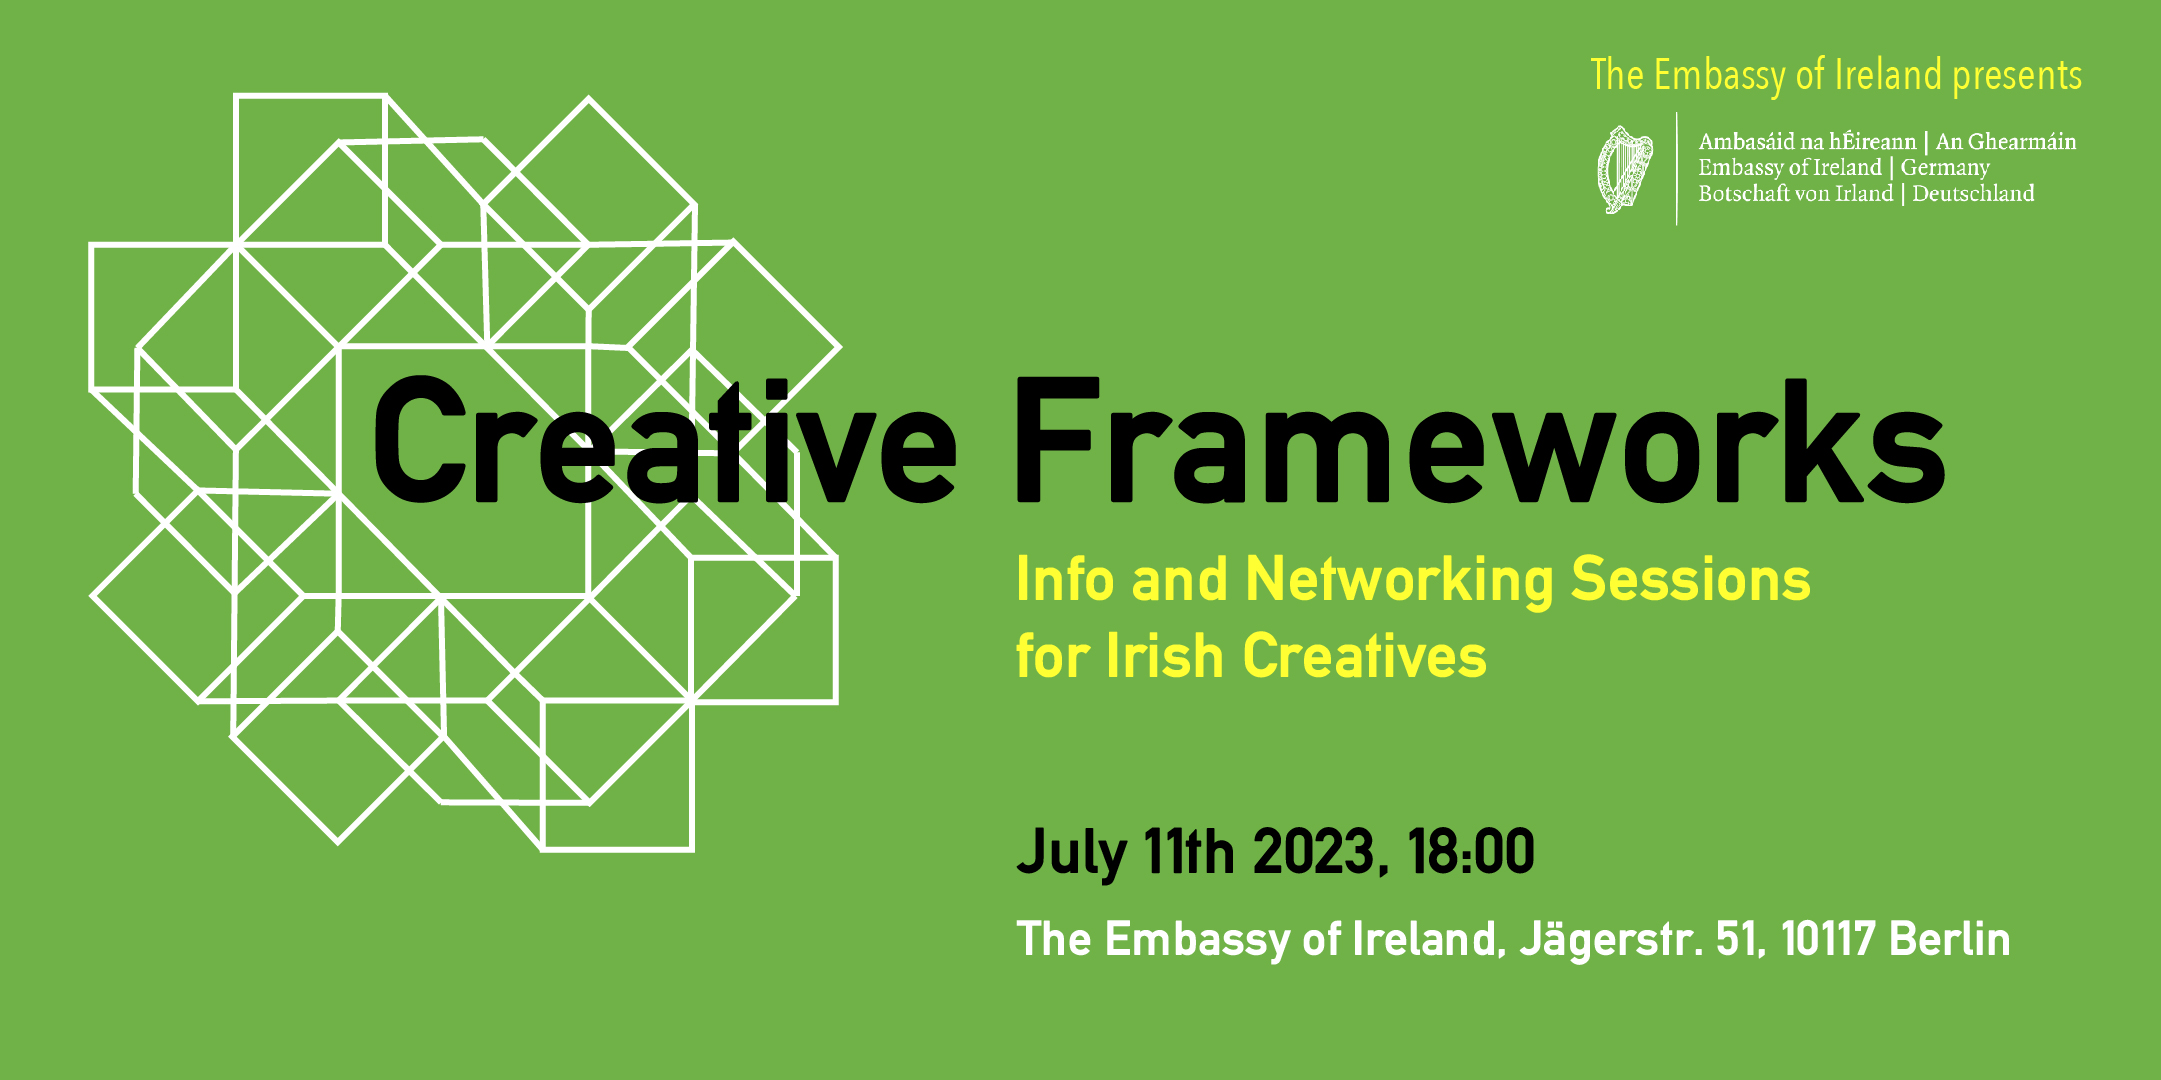 Creative Frameworks, July 11, 18:00